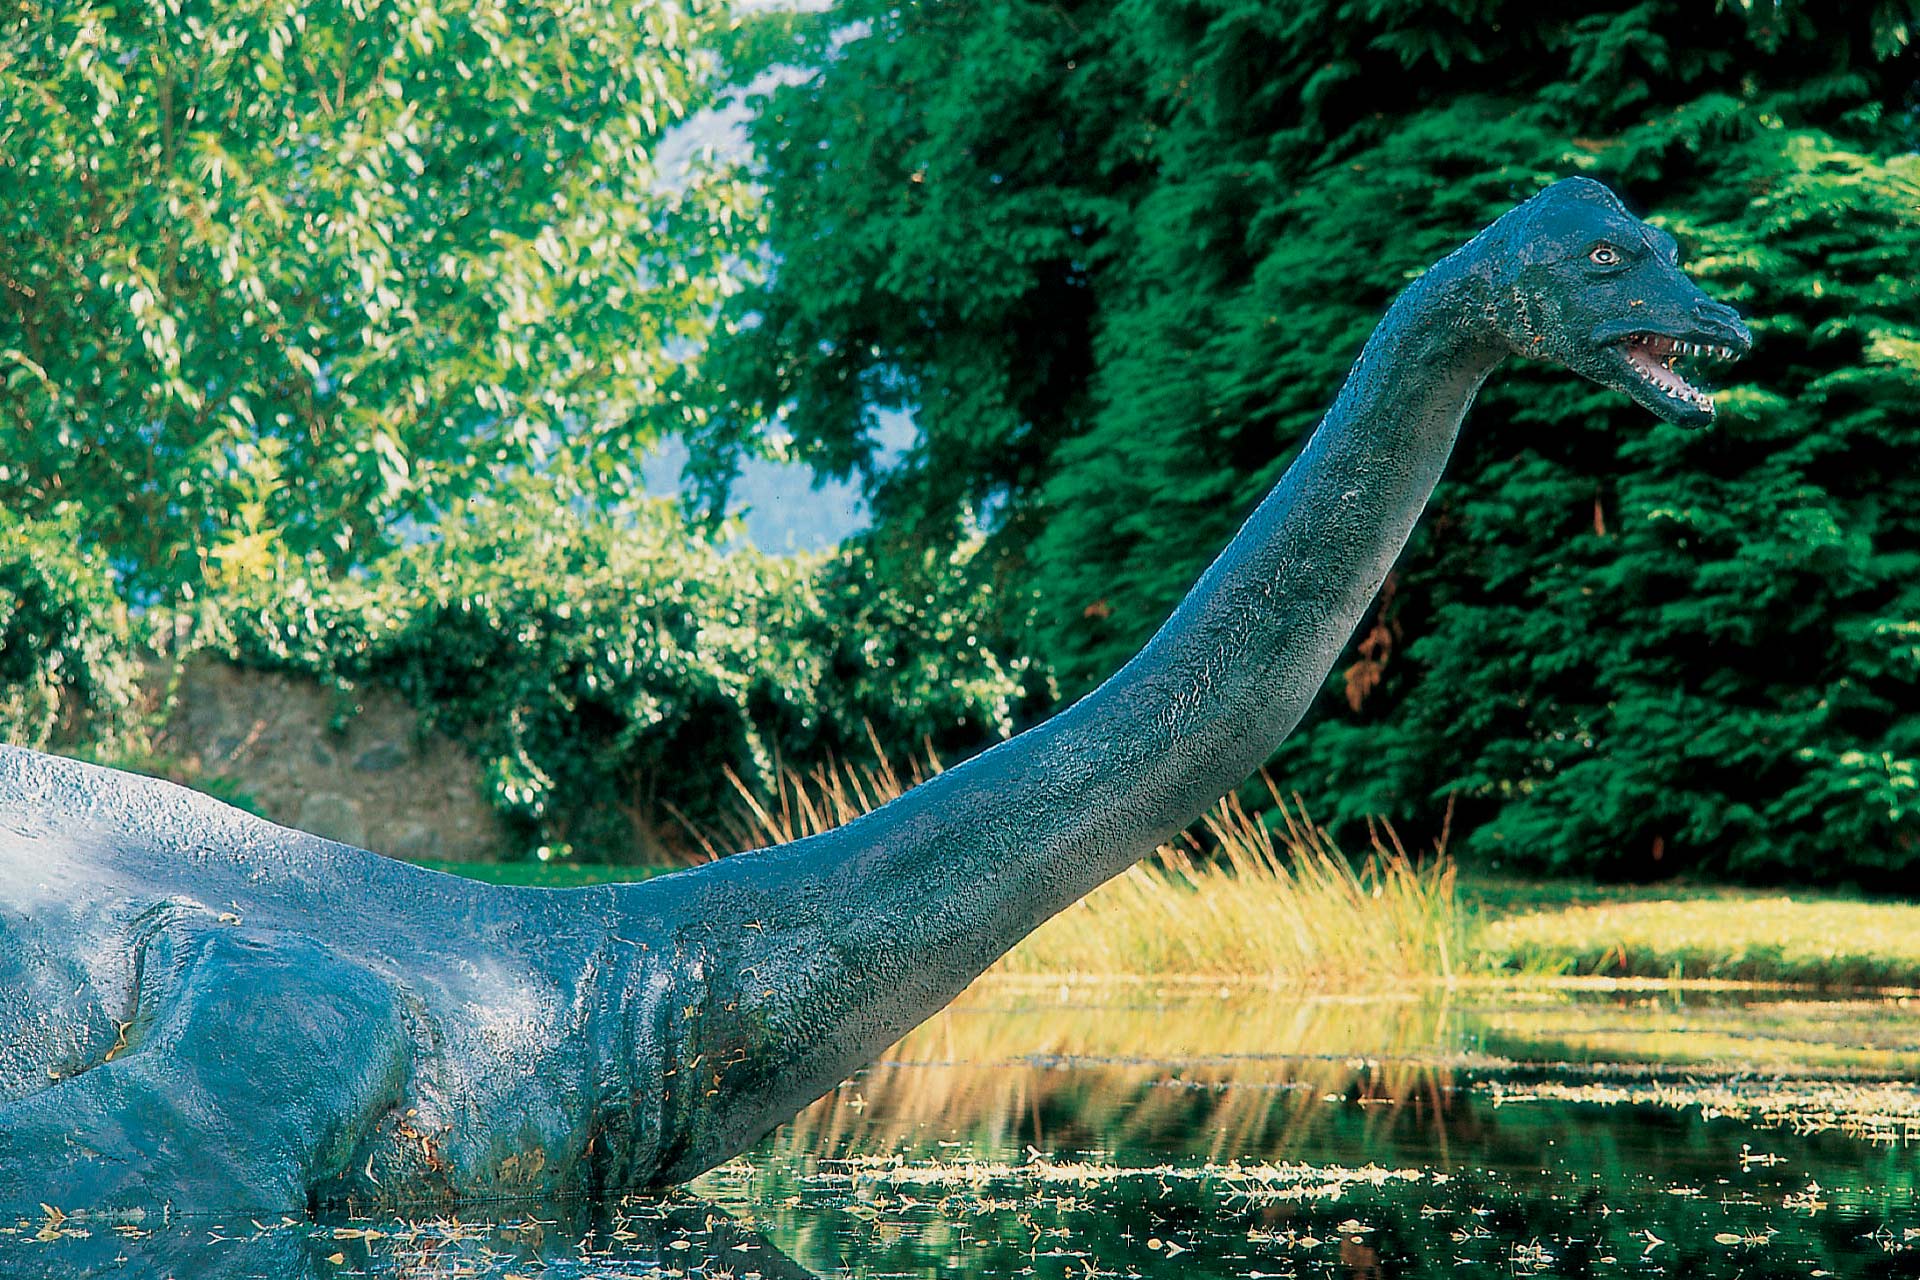 Nessie The Loch Ness Monster VisitScotland | tyello.com